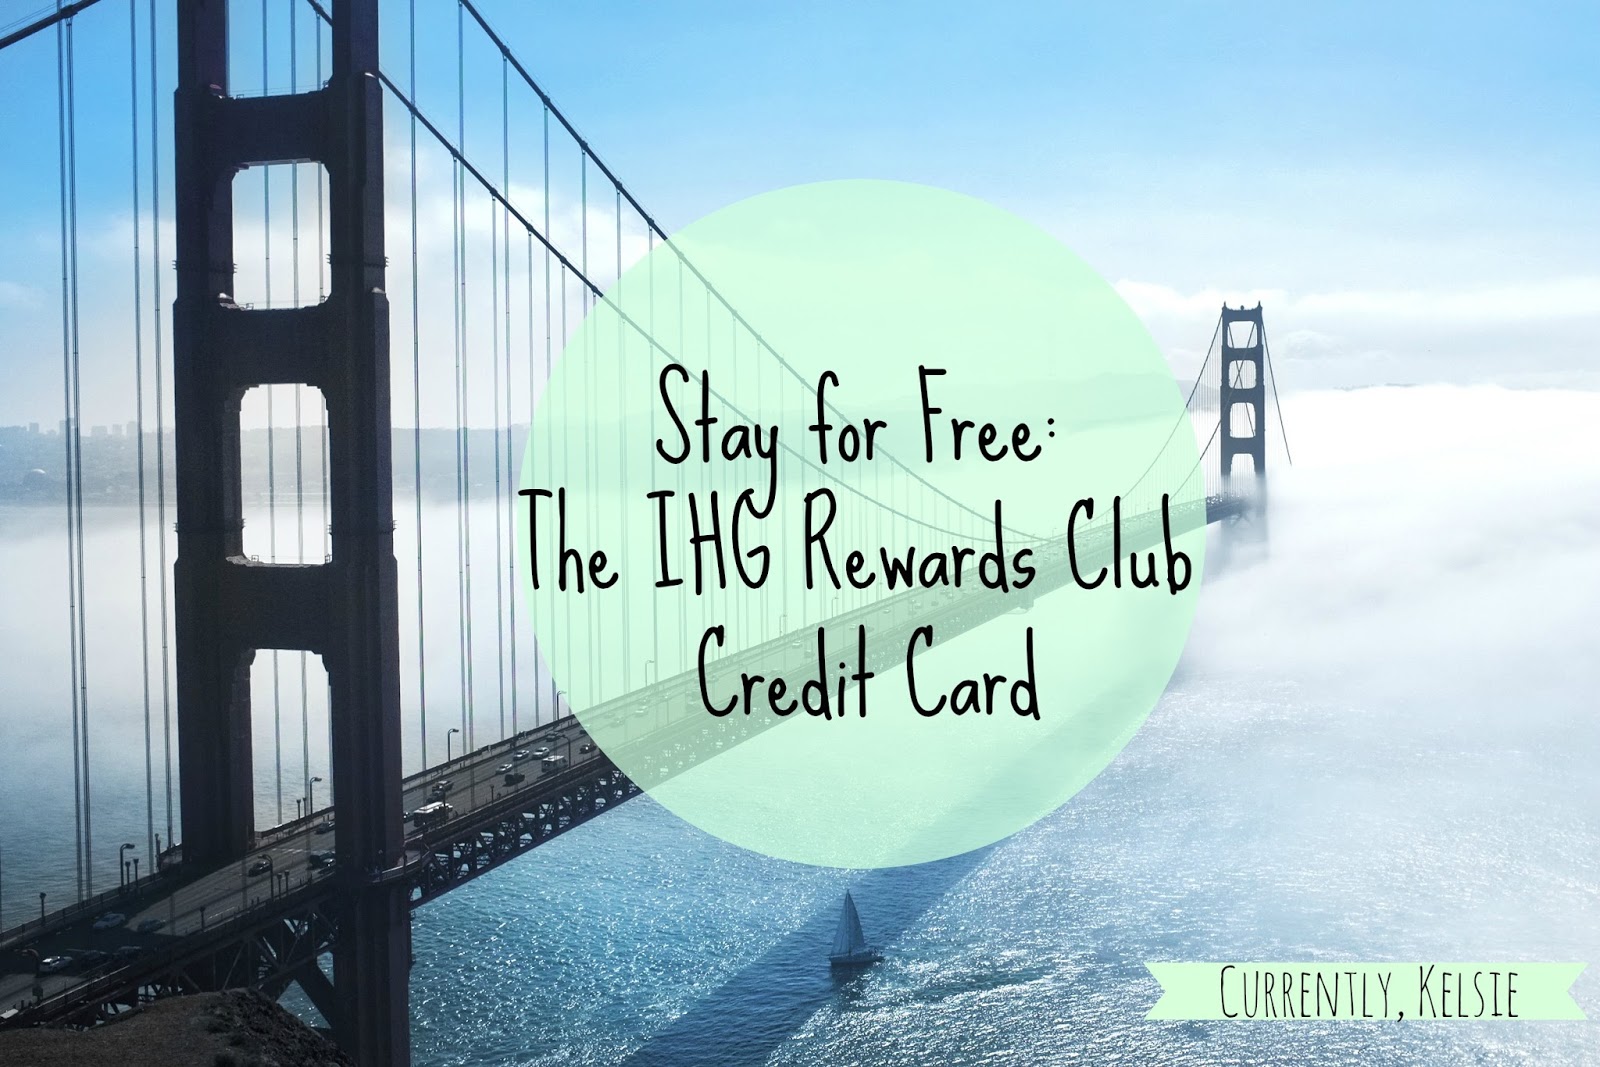 The Ihg Rewards Club Credit Card Stay For Free Currently Kelsie